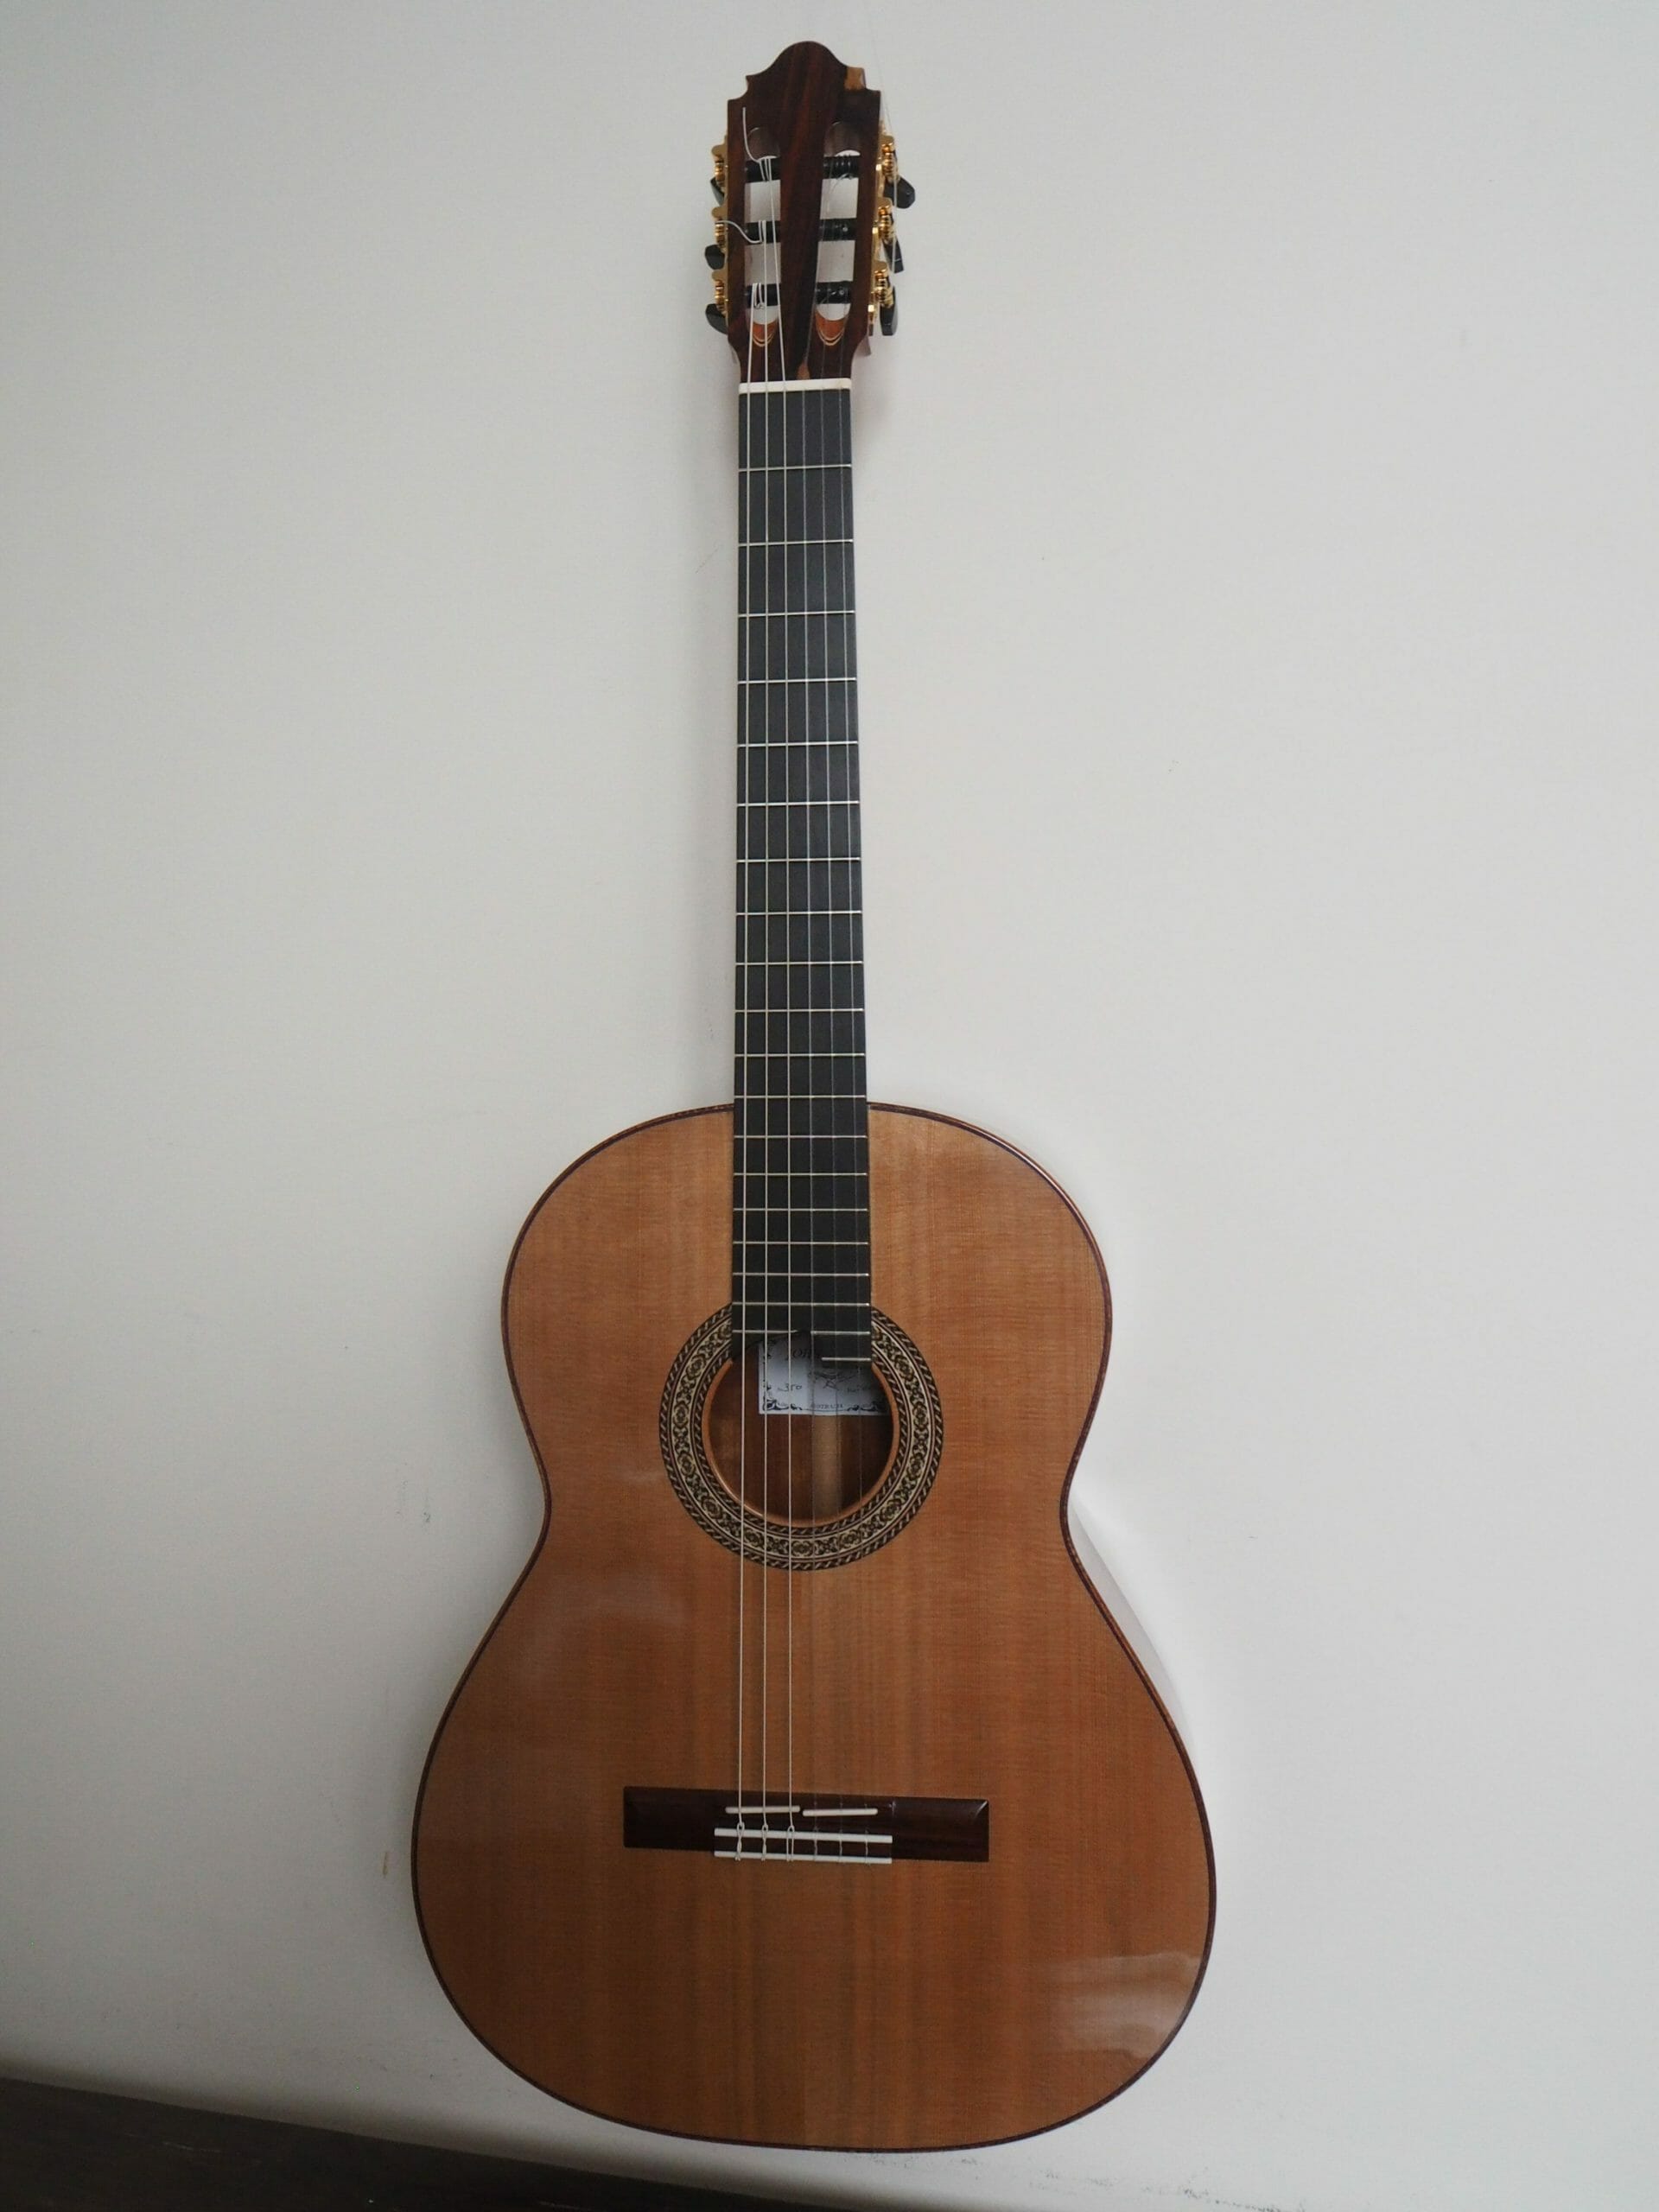 Guitare classique luthier John Price n°352- Australie - Guitare